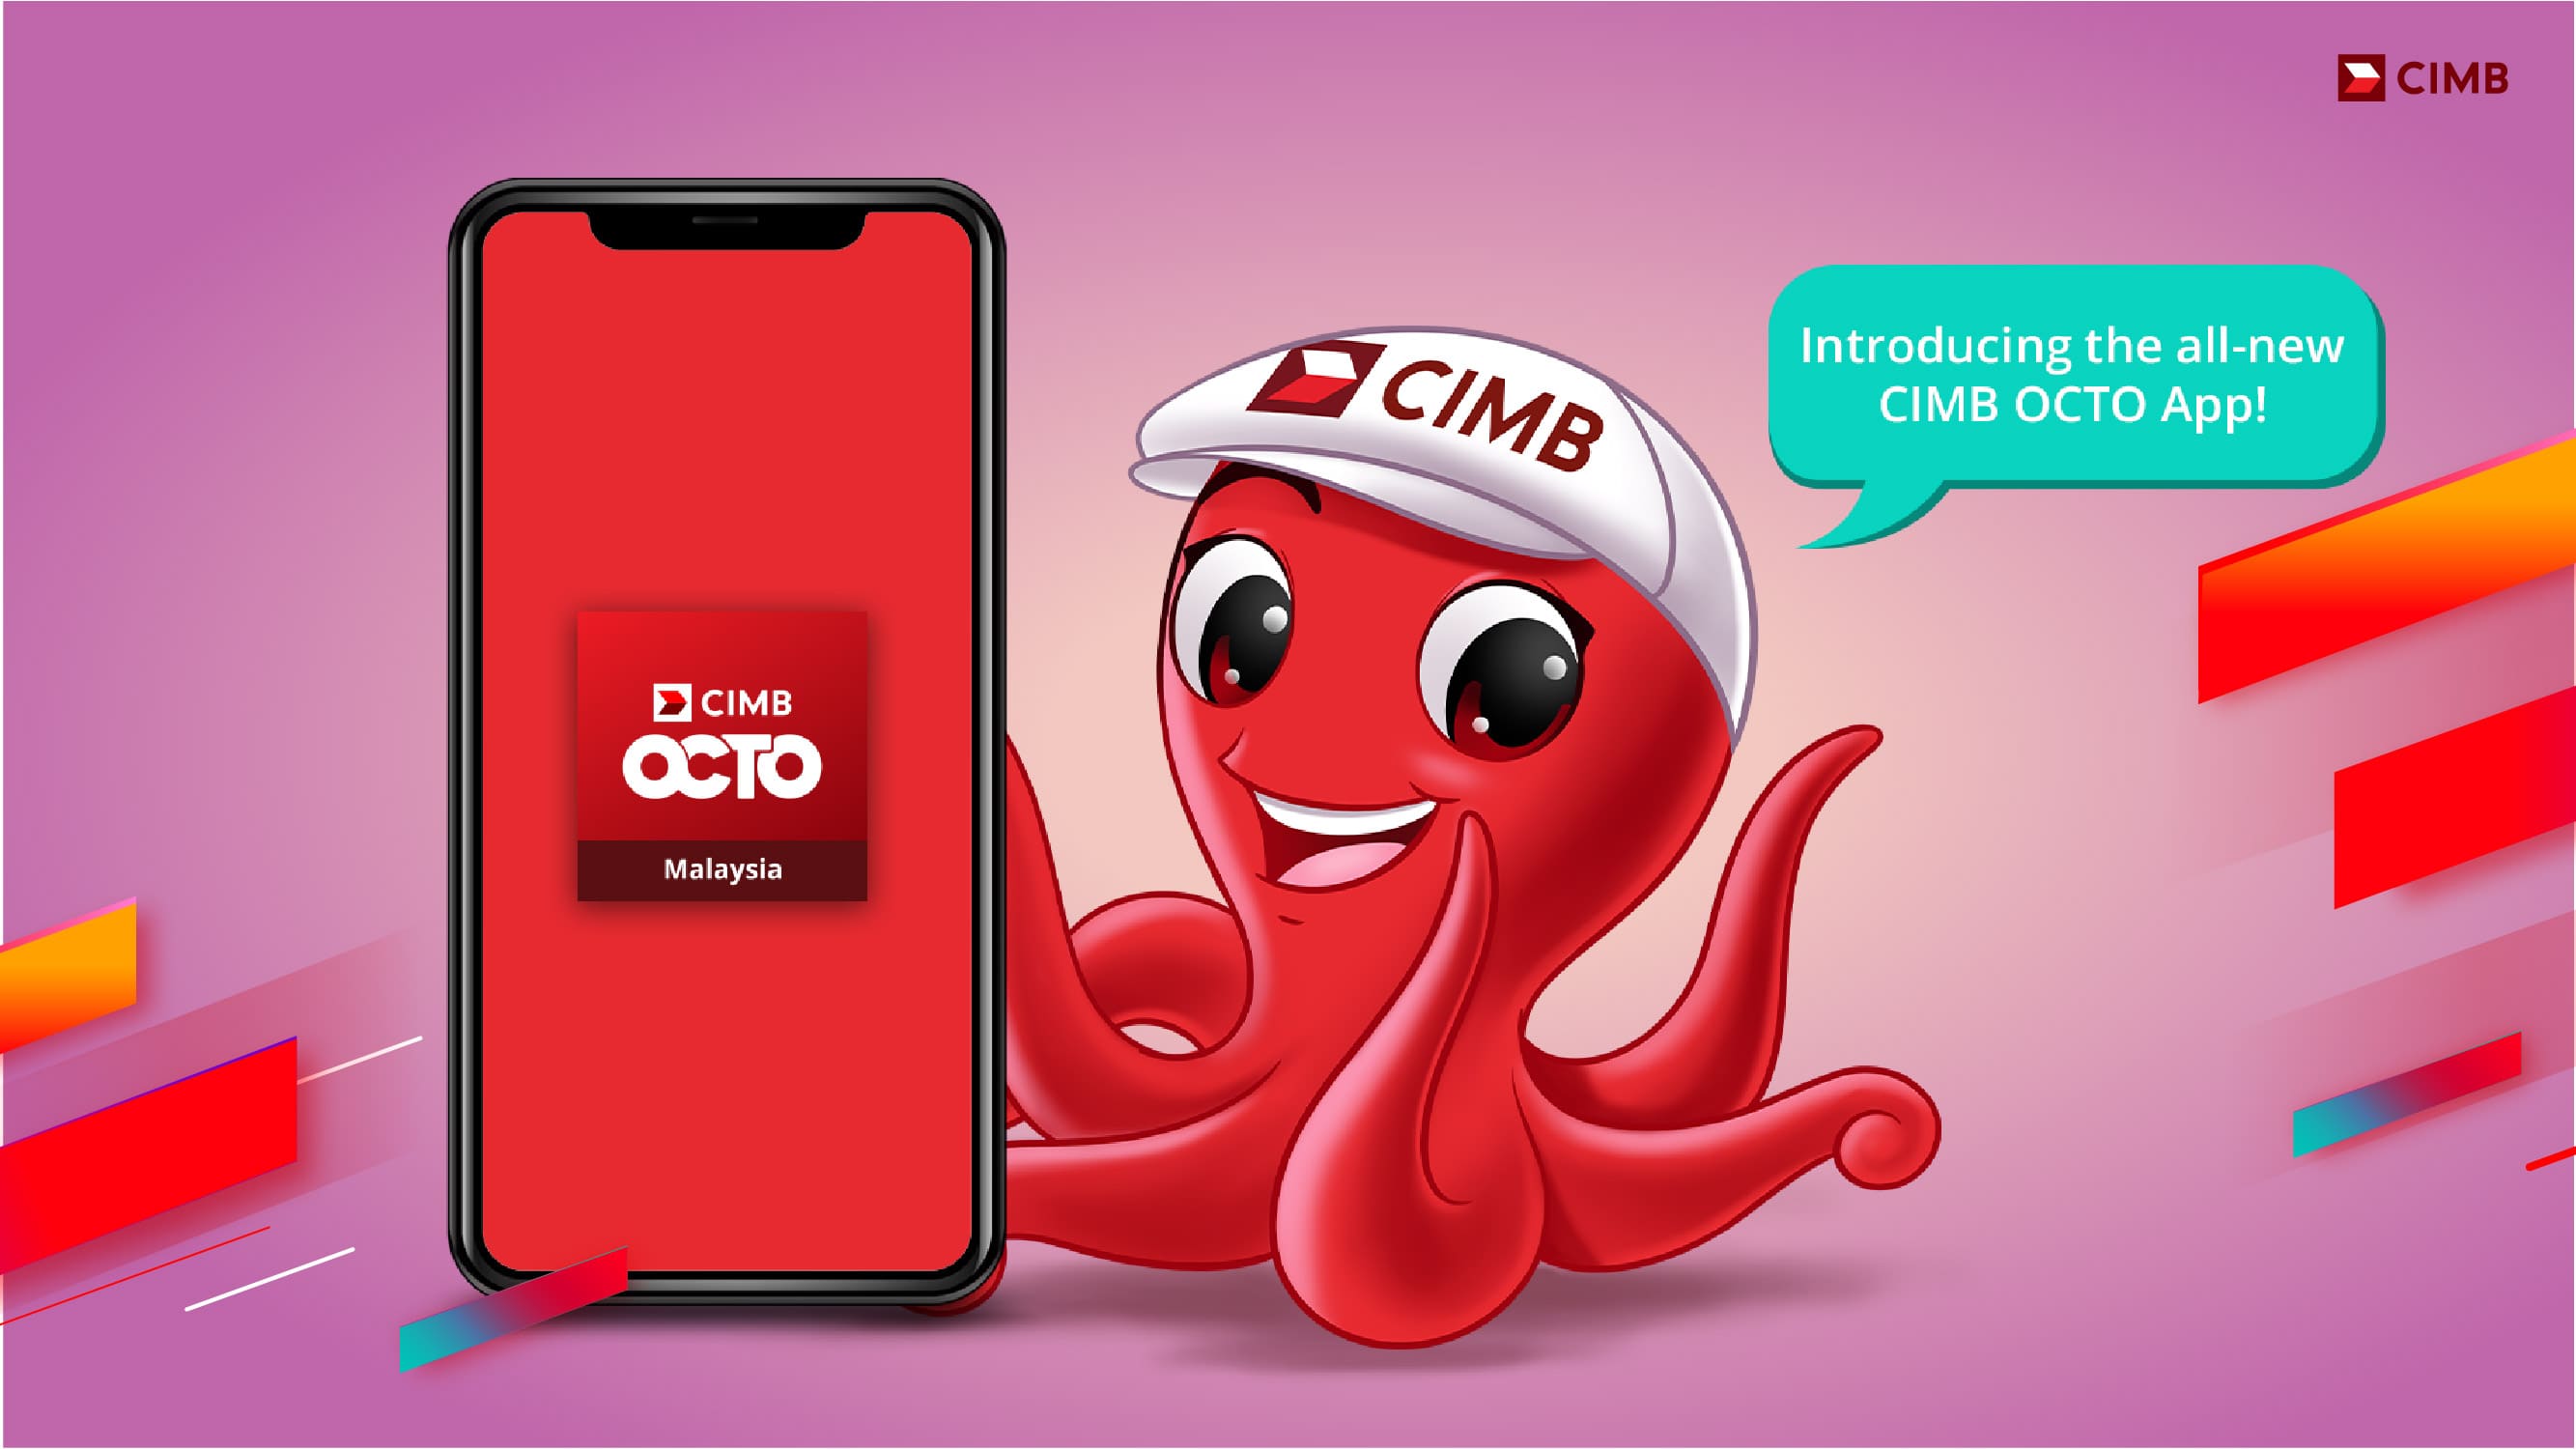 CIMB OCTO App - First Time Login